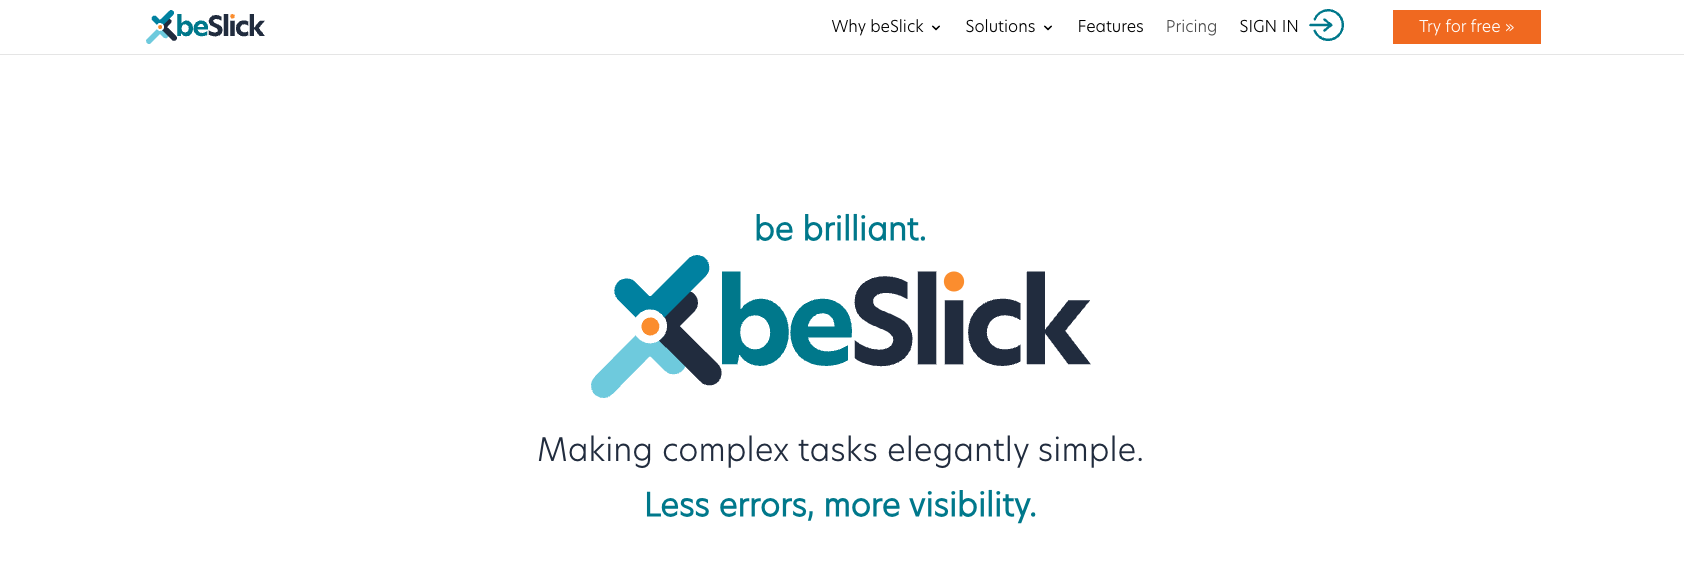 beSlick homepage screenshot